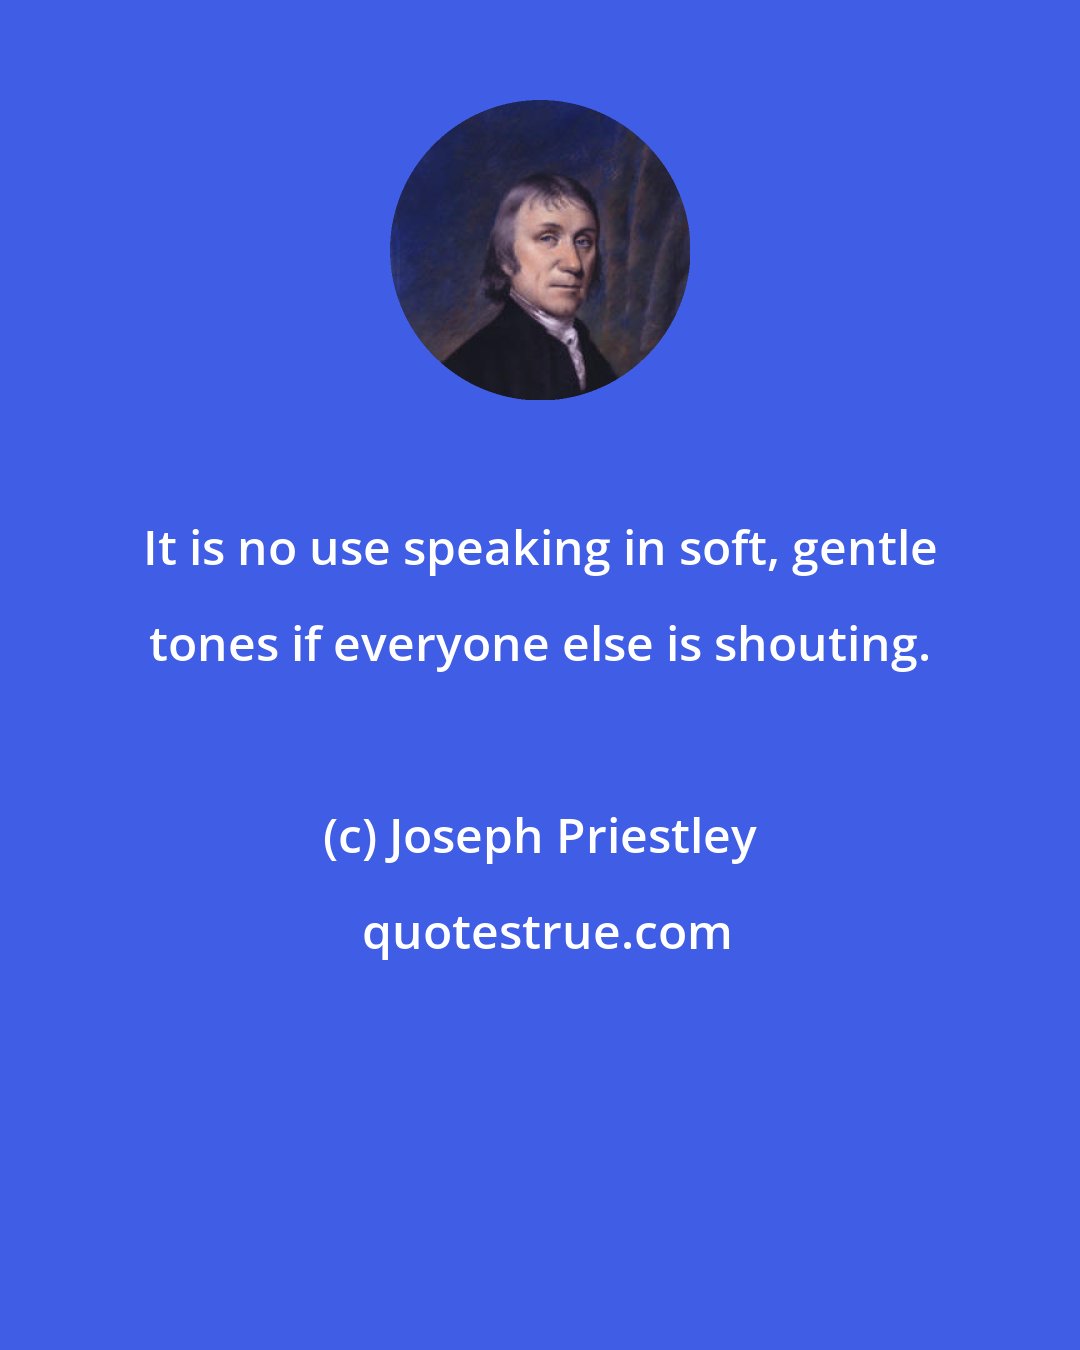 Joseph Priestley: It is no use speaking in soft, gentle tones if everyone else is shouting.